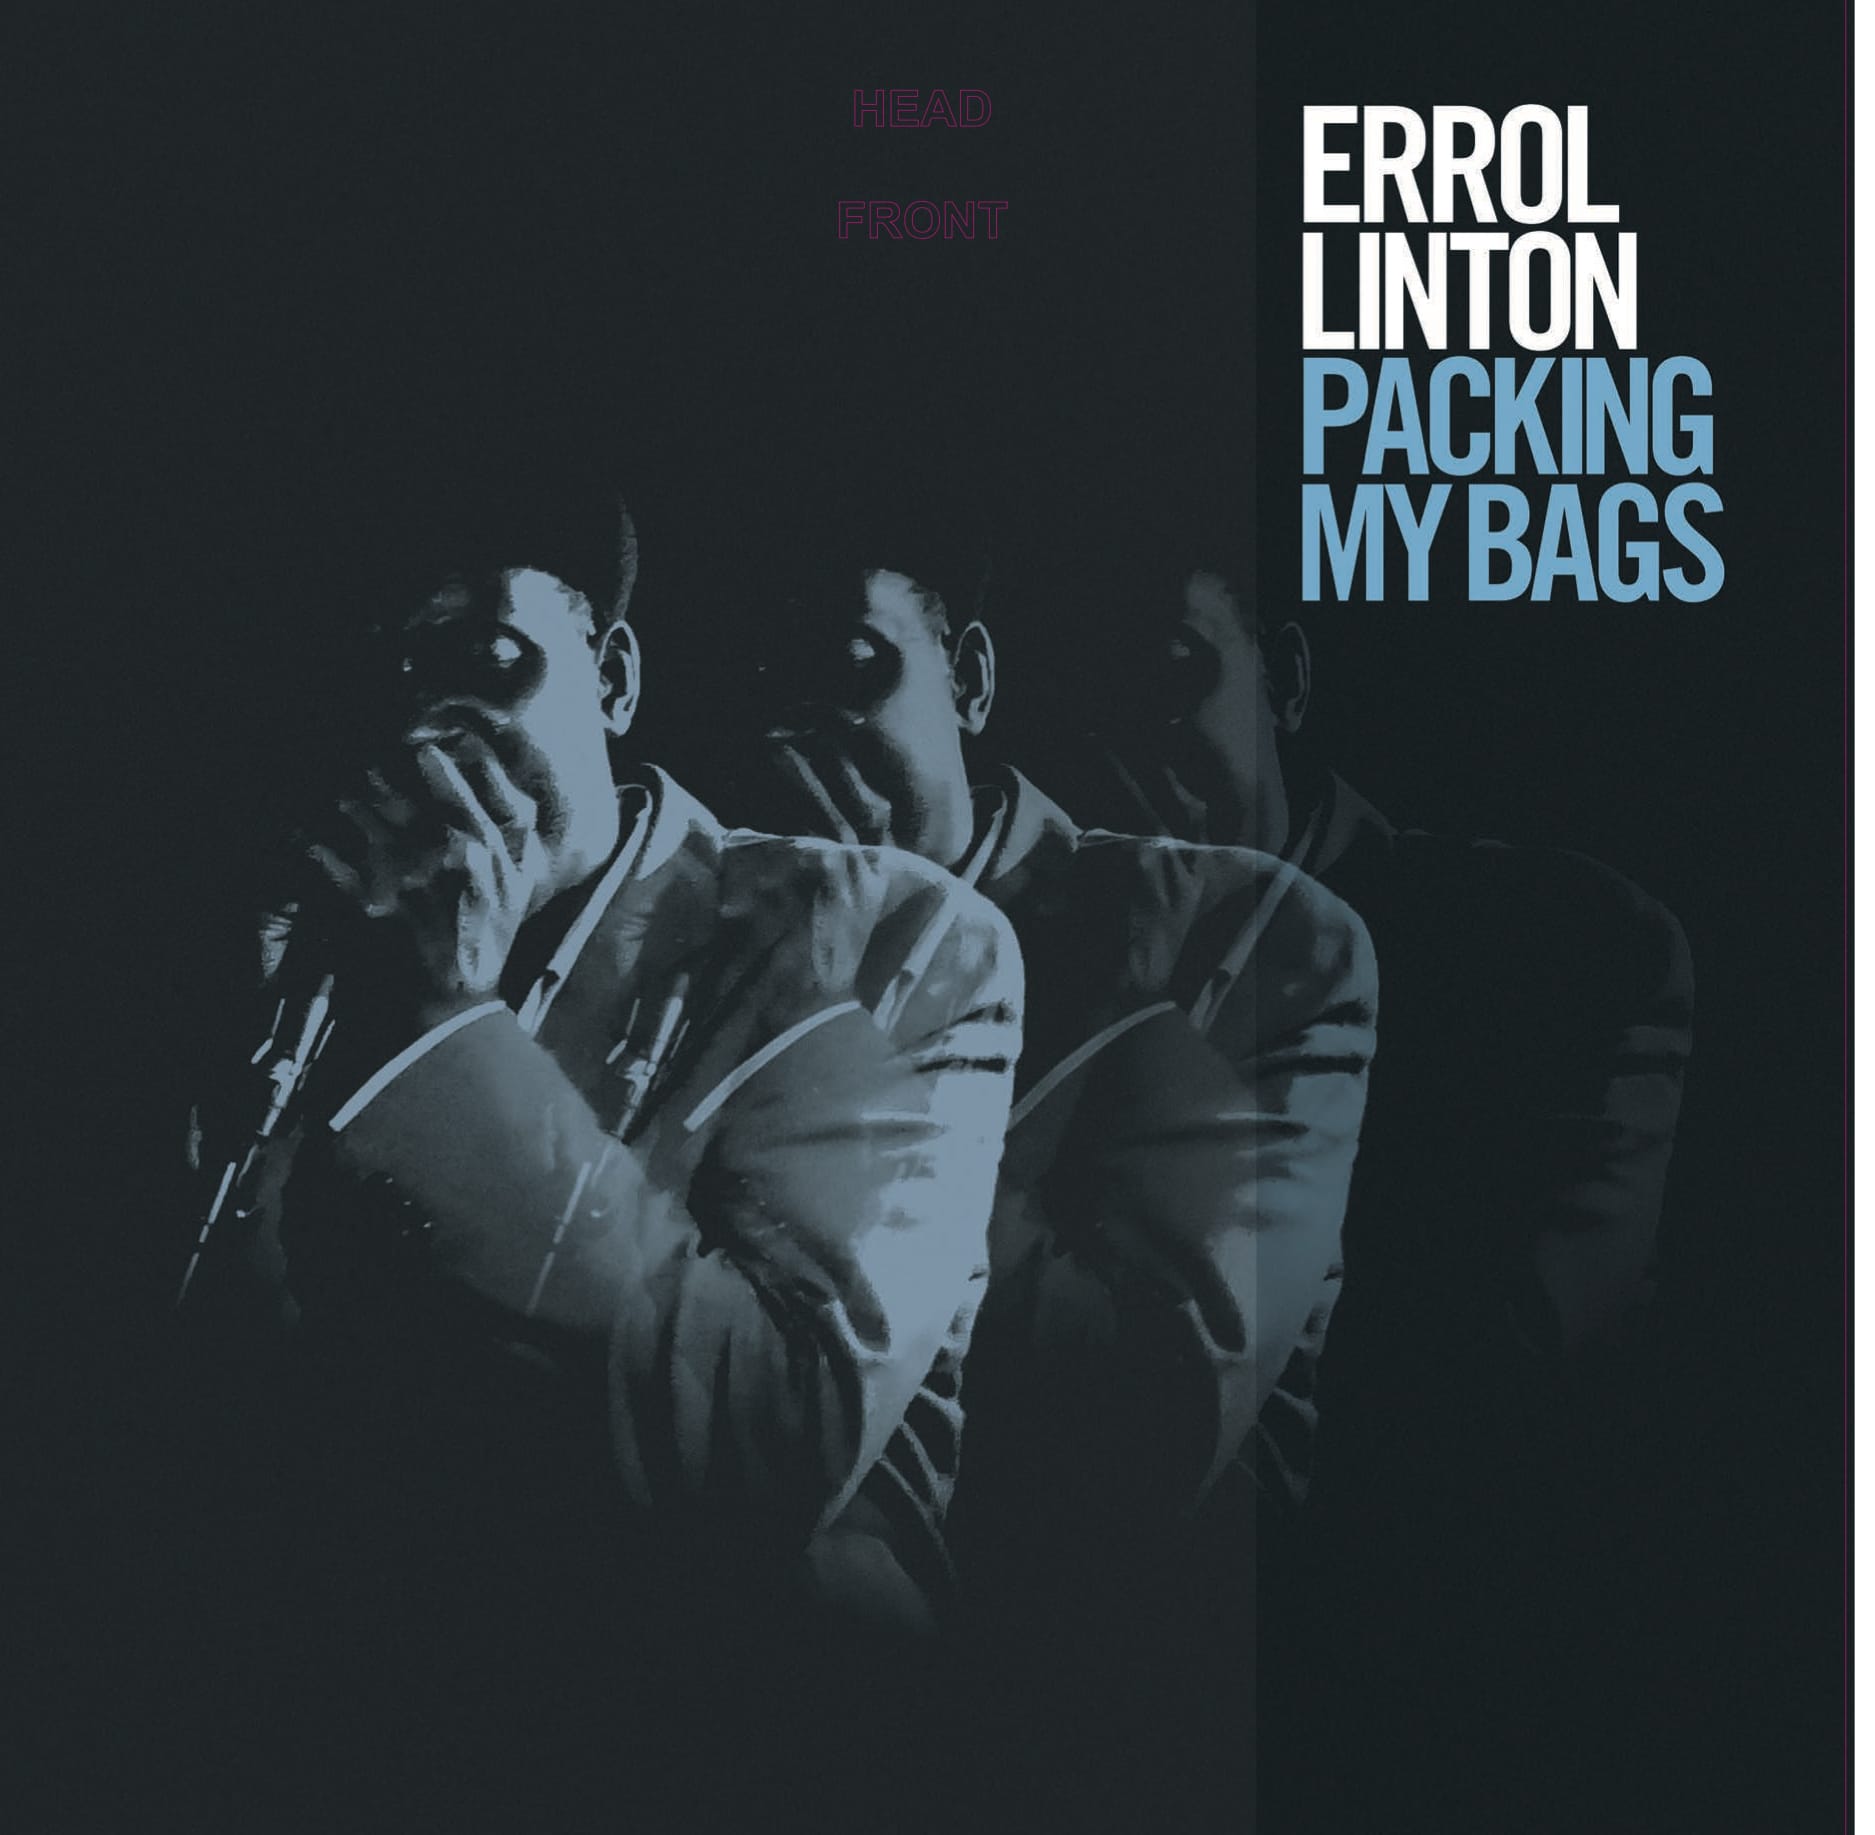 Errol Linton Packing My Bags - JAZZ FM nominated best British Blues Artist 2020